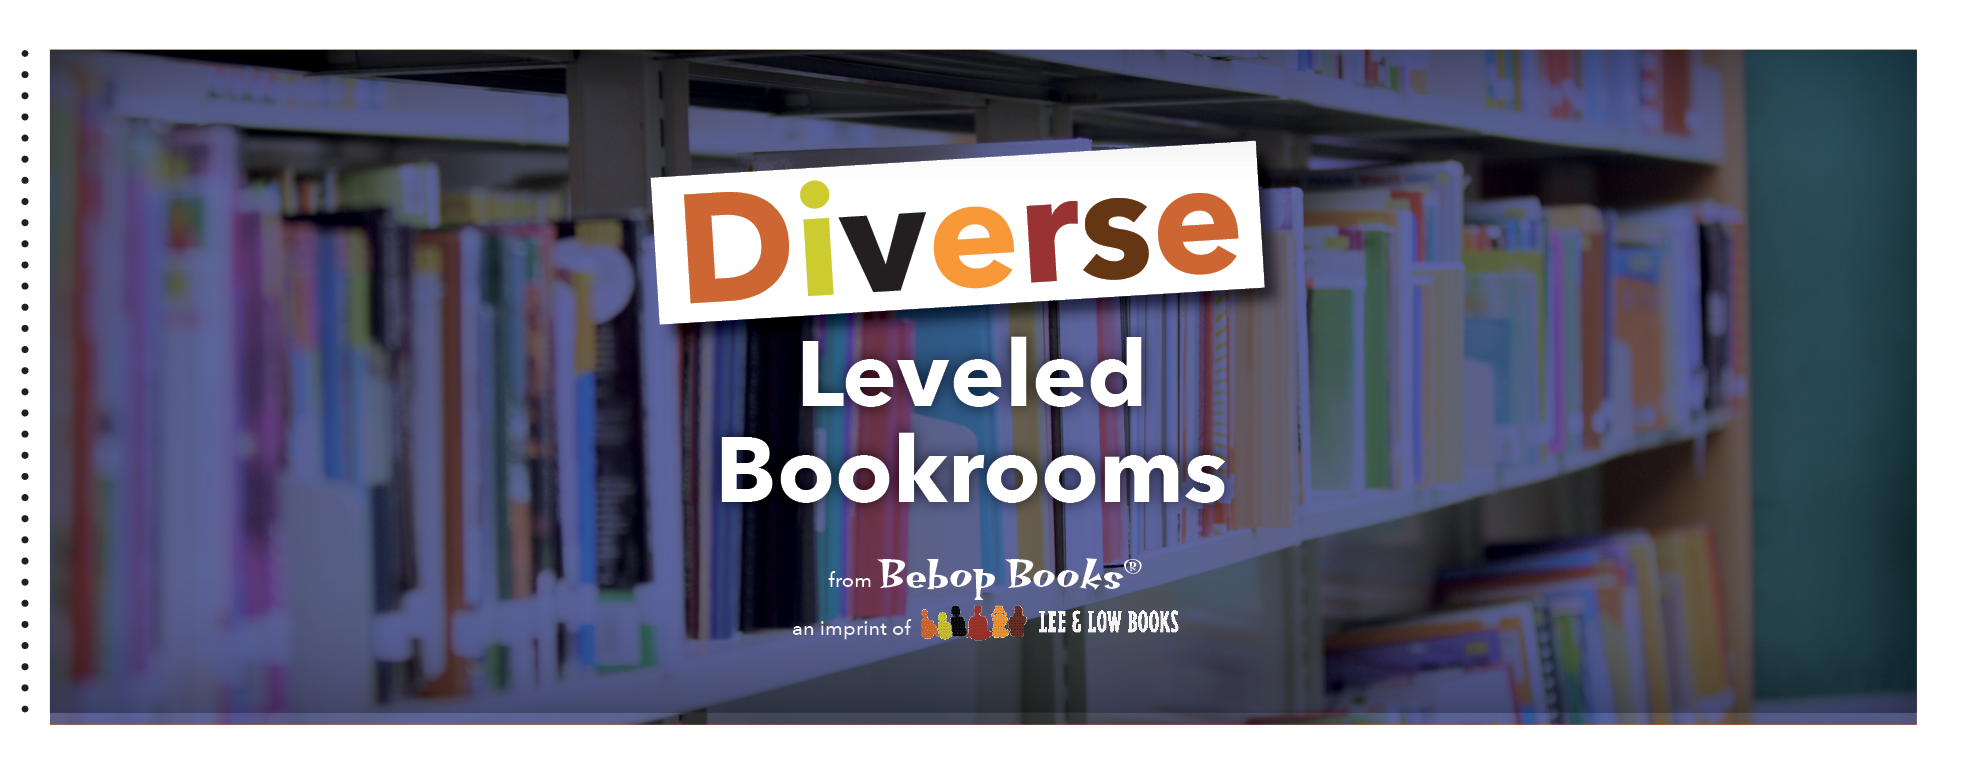 Educators_diverseleveledbookrooms